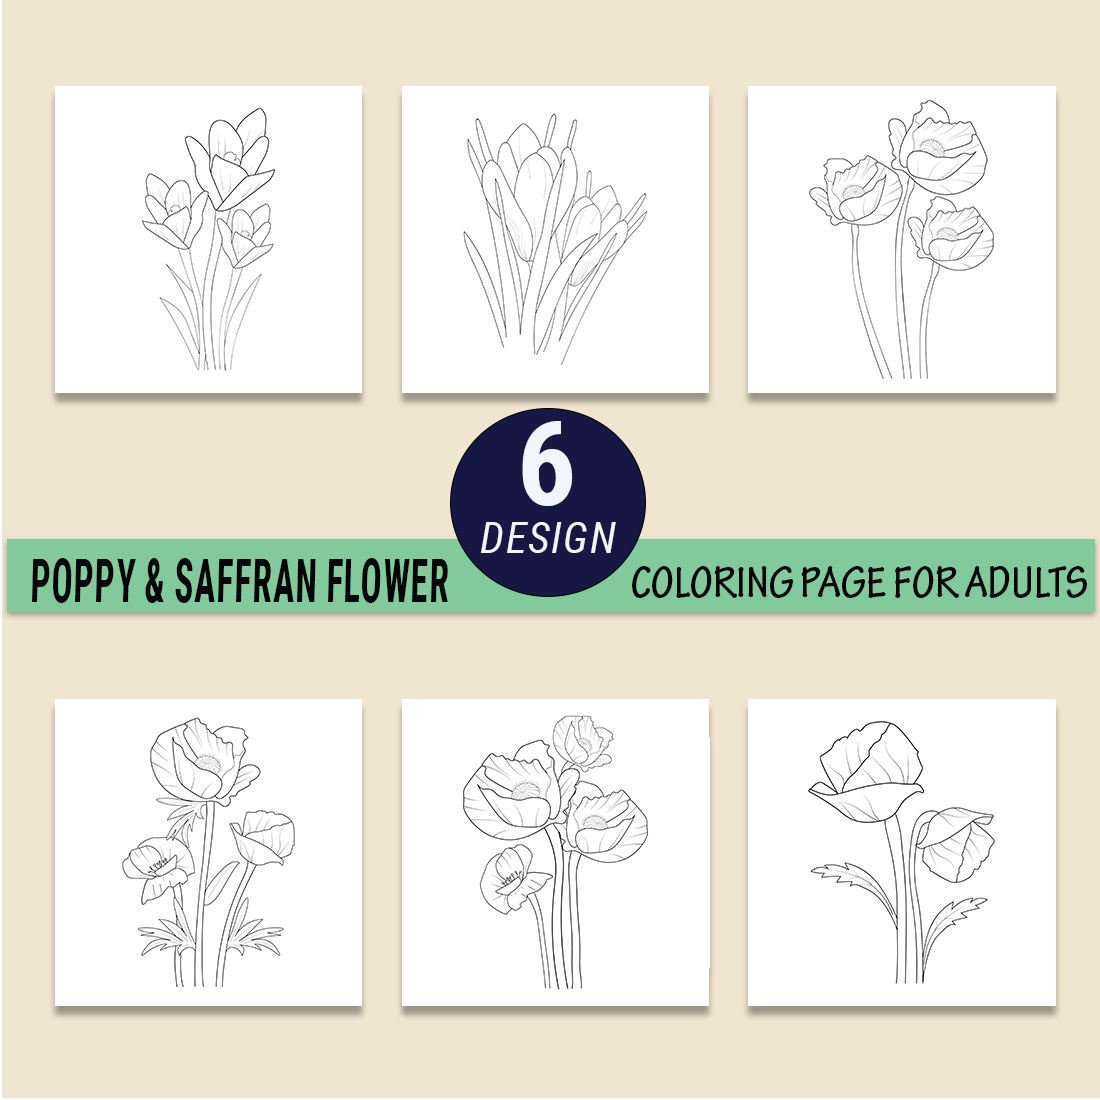 California poppy drawing, crocus flower coloring page, saffron flower vector art crocus flower illustration, preview image.